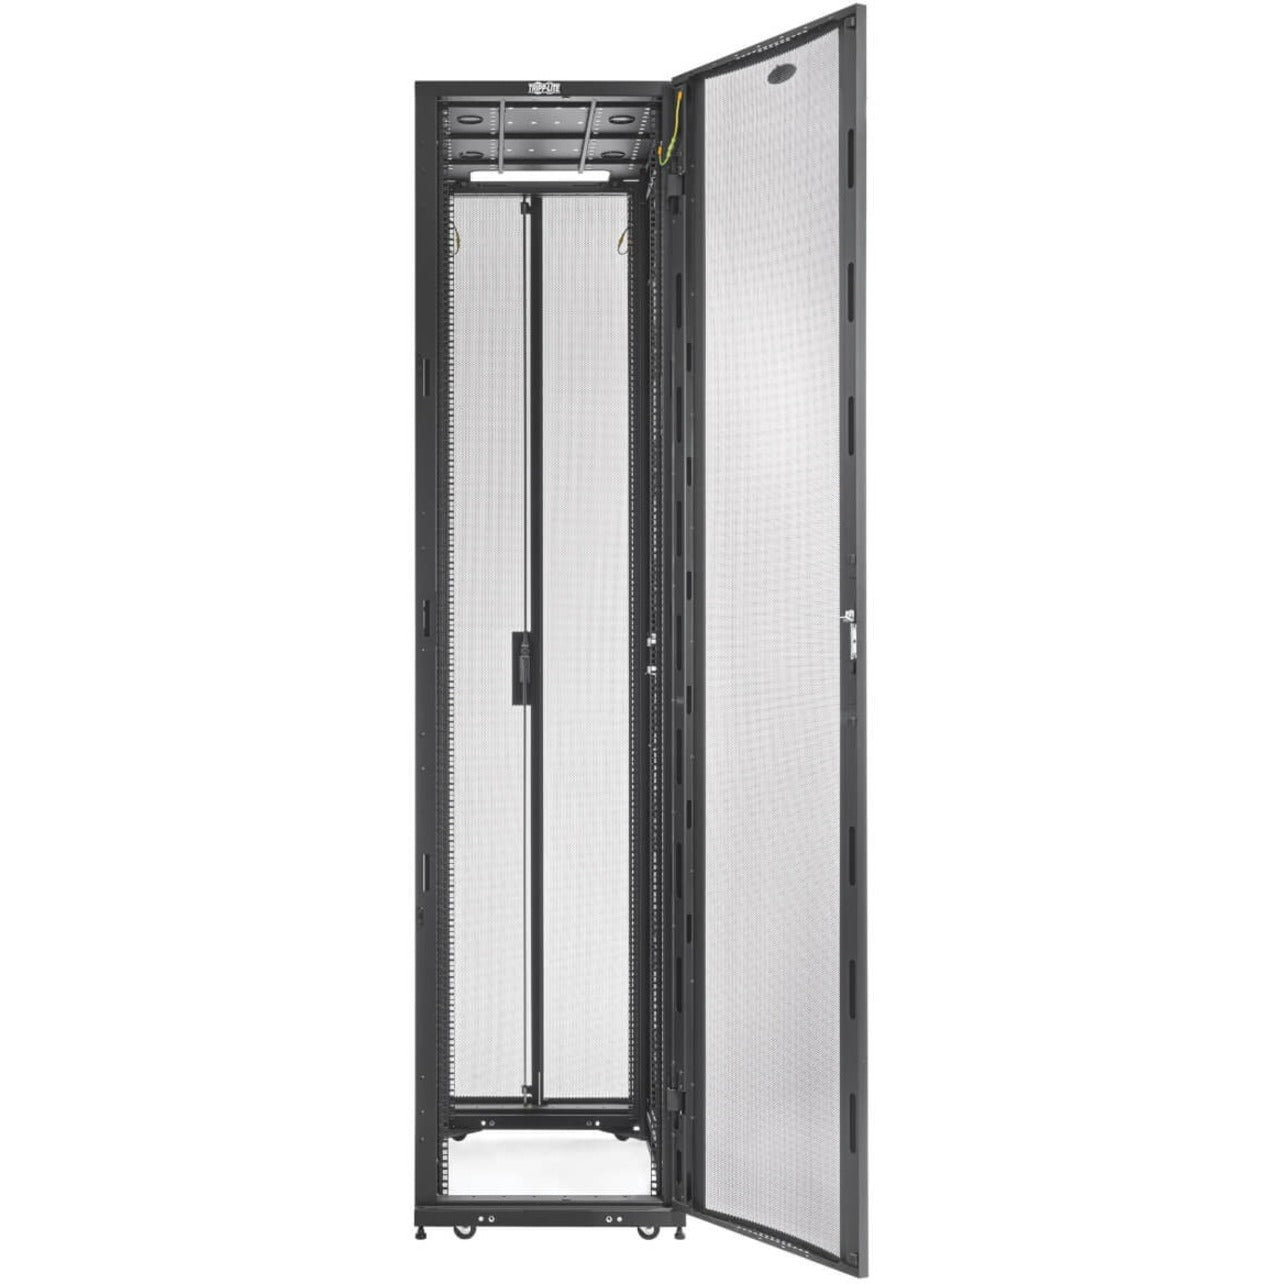 Tripp Lite SR52UBDP 52U Server Rack, Casters, Cable Management, Reversible Door